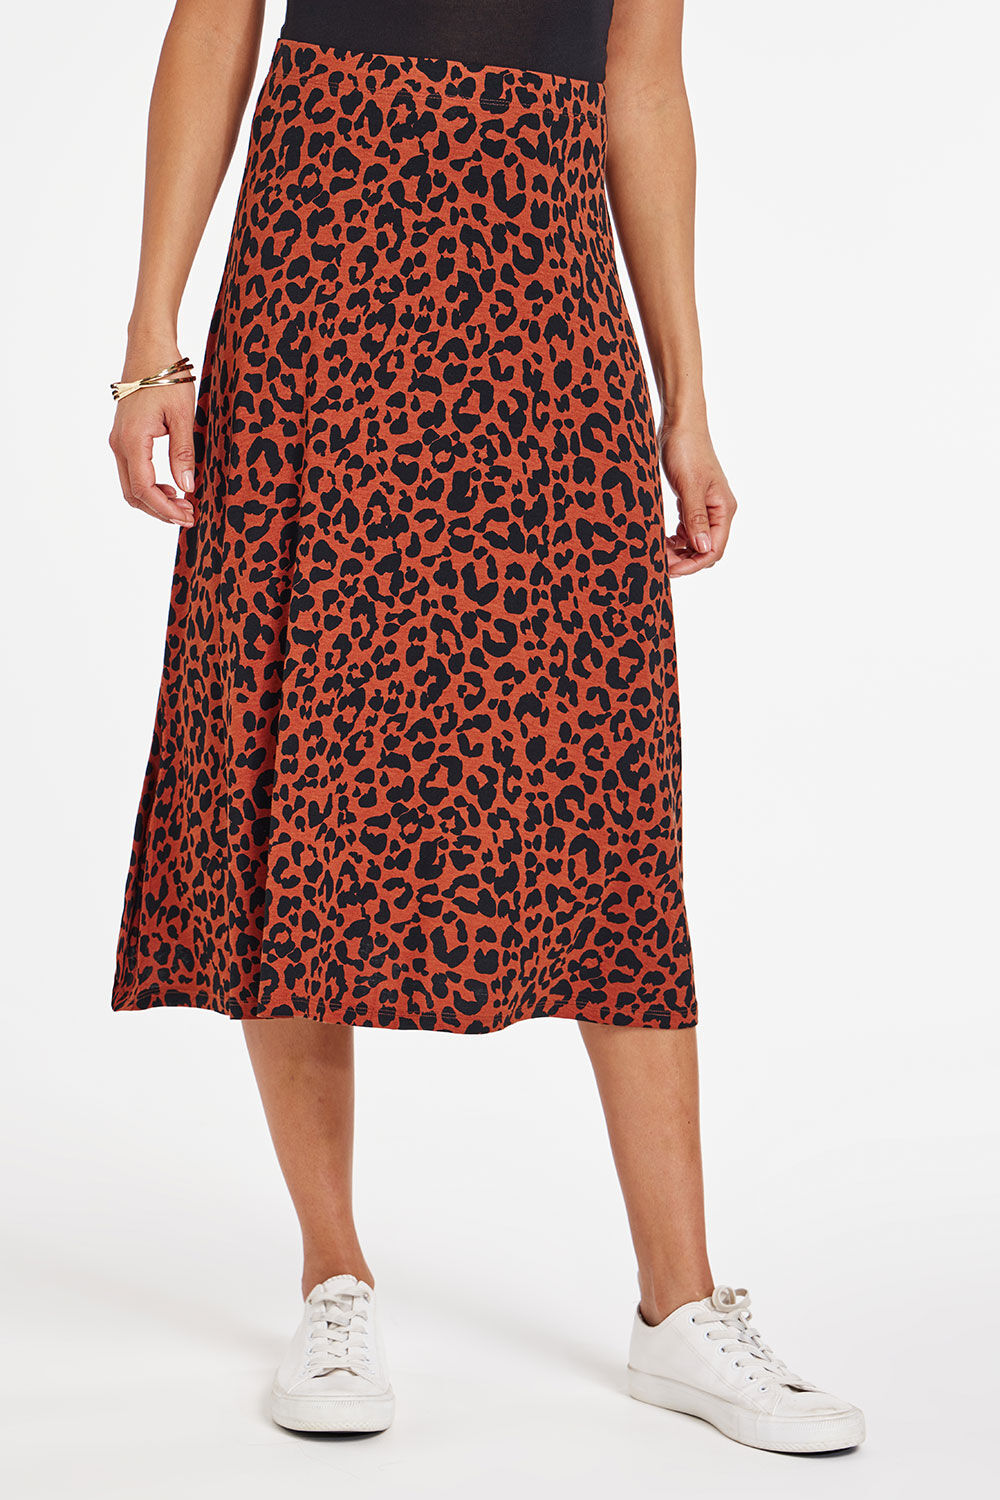 Bonmarche Brown Animal Print Flippy Jersey Elasticated Skirt, Size: 22